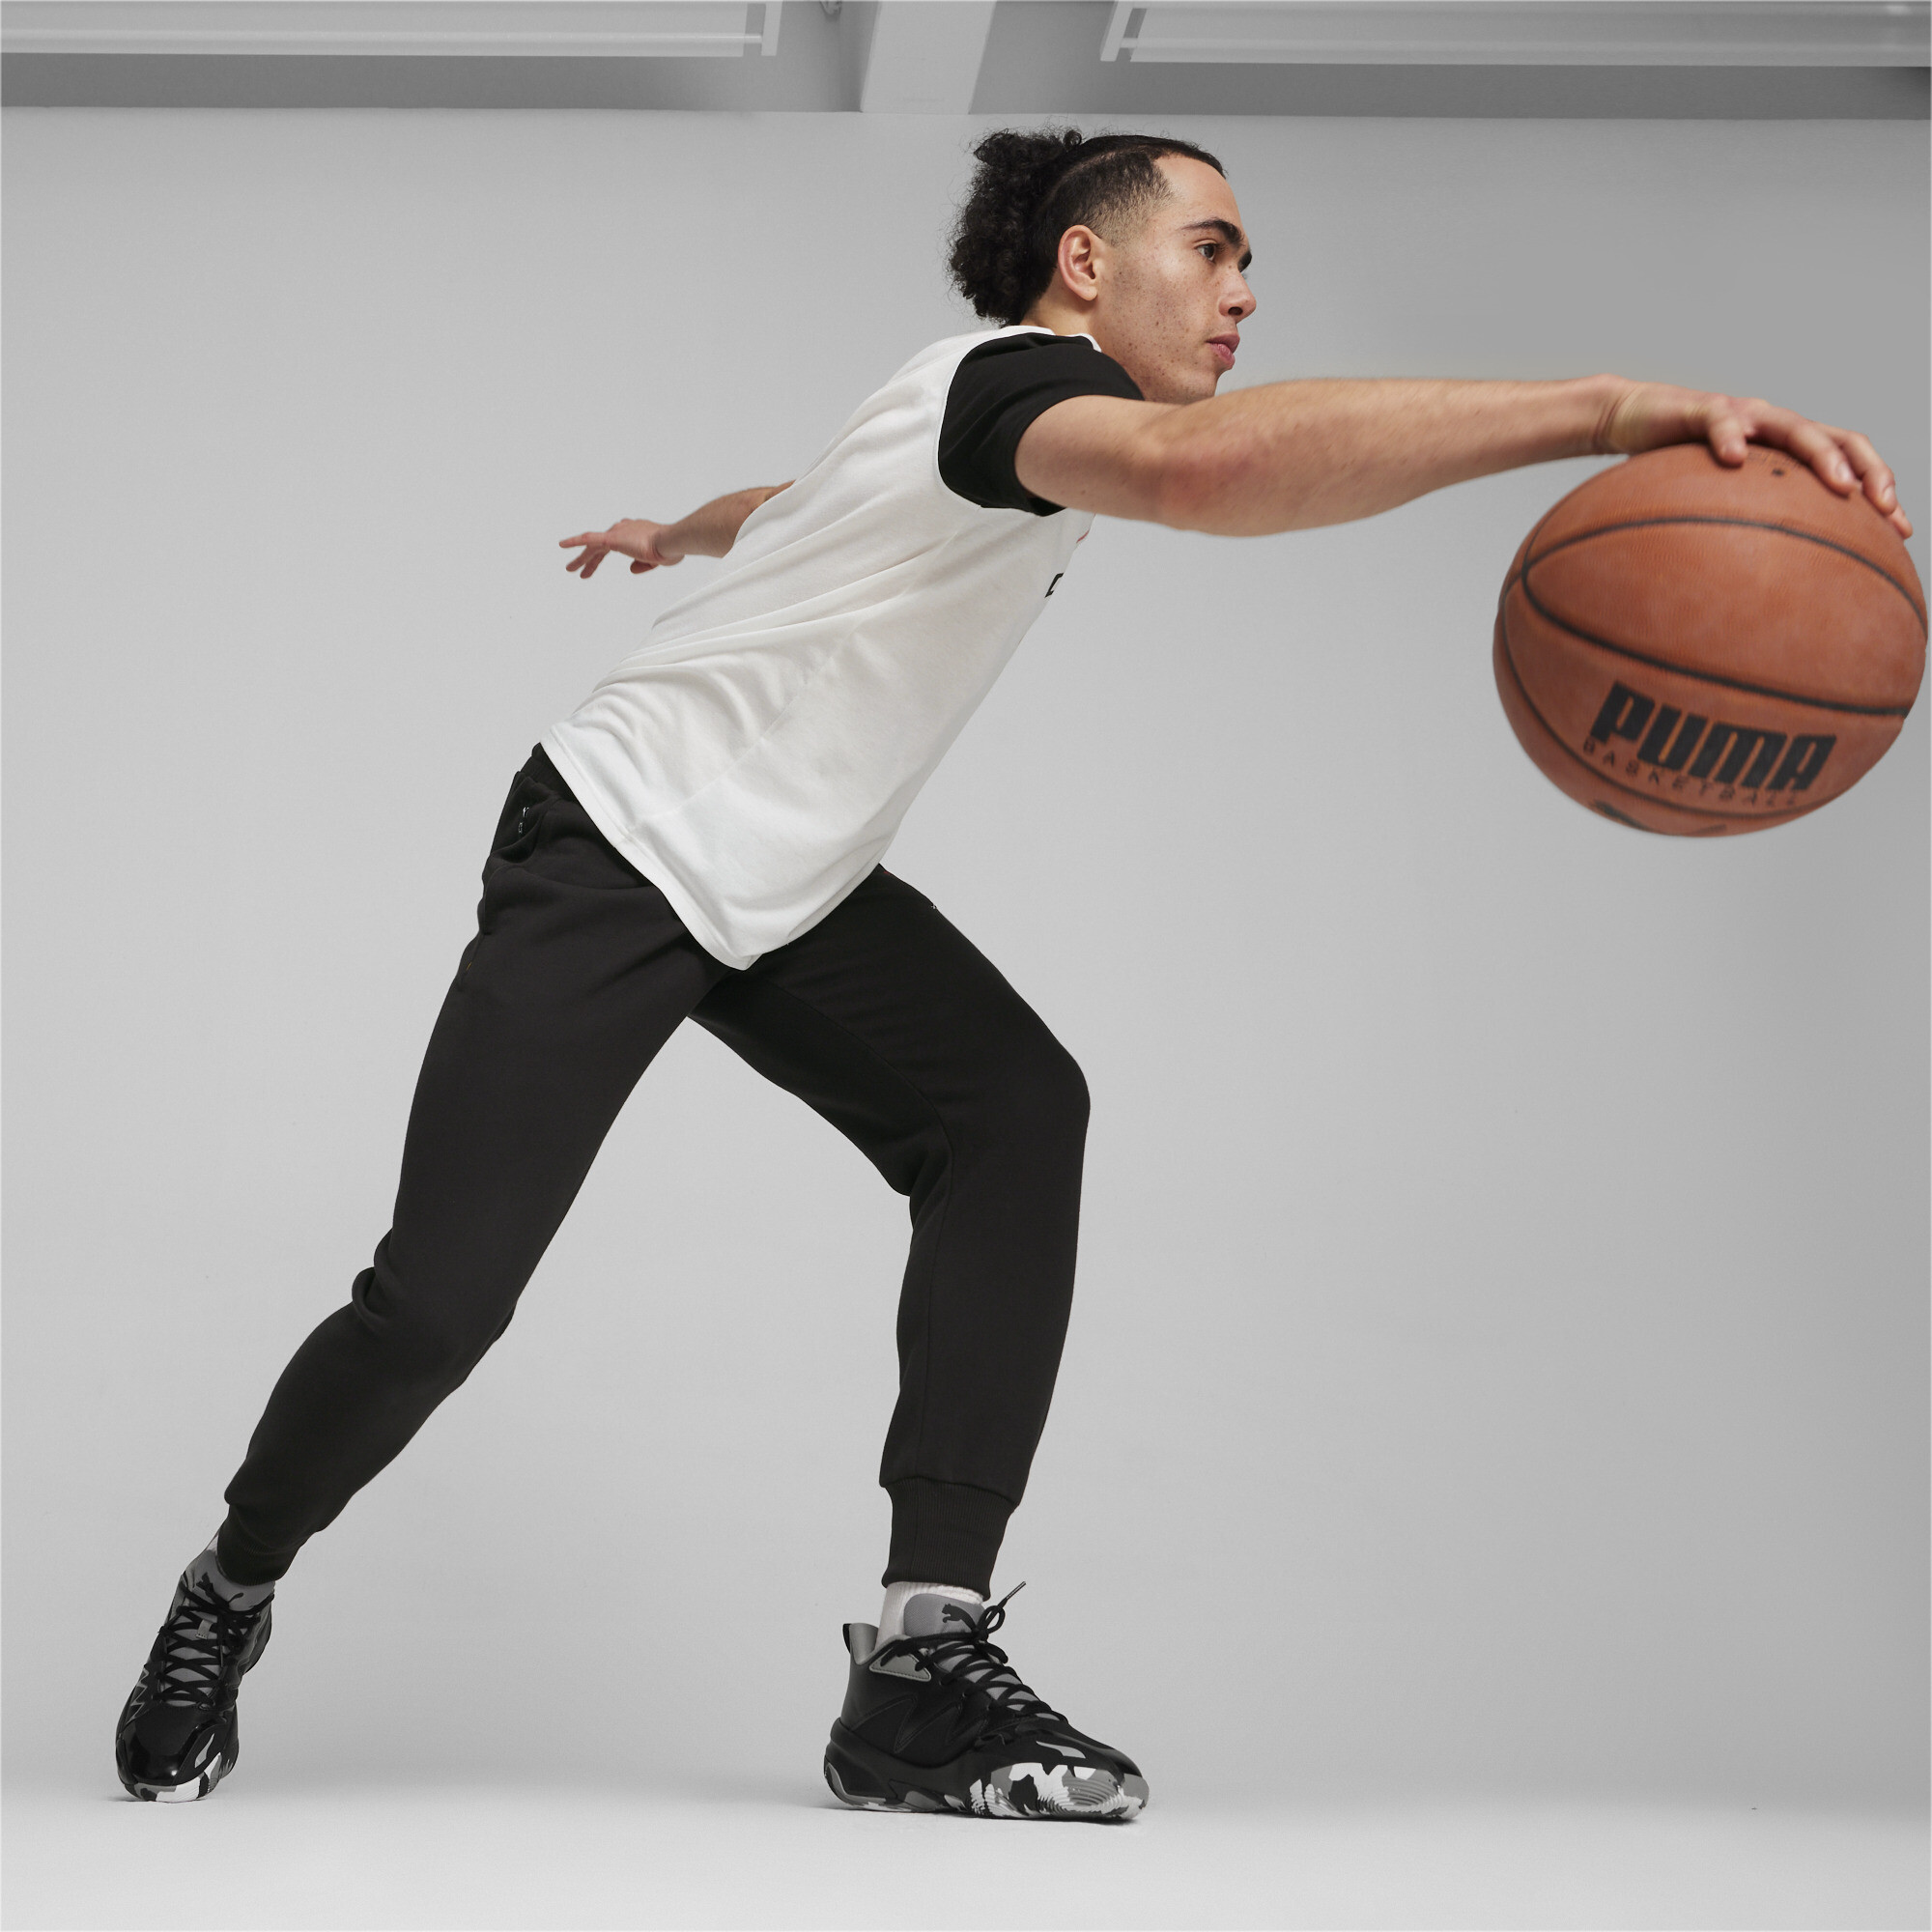 Men's Puma Booster Basketball Sweatpants, Black, Size 3XL, Sport